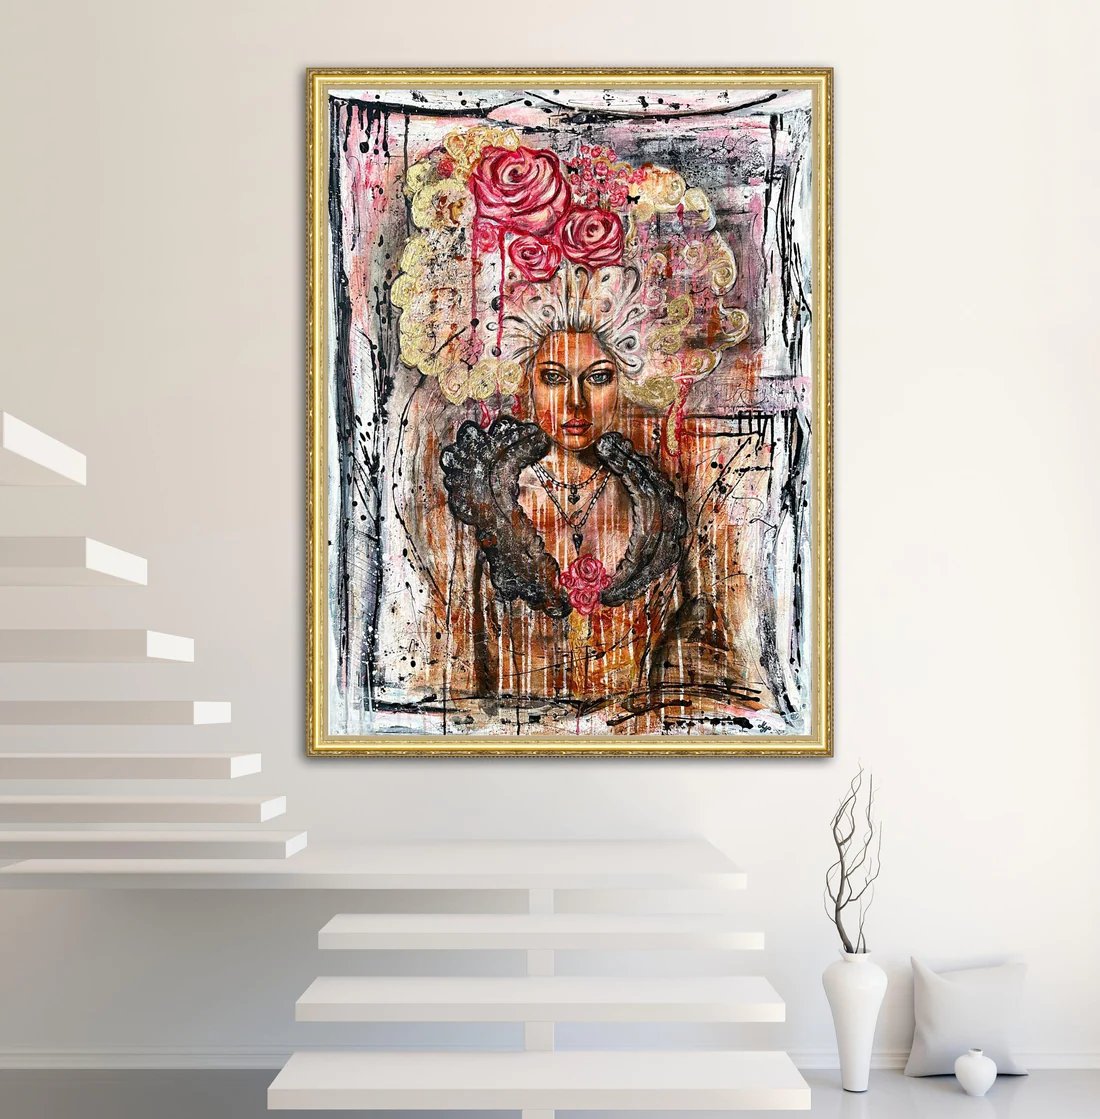 \'Queen of Spades - Original Painting on Large Canvas\' 
#ArtPrintDiscounts #StylishHomes #InteriorArtistry #HomeDecor #CyberMondayDeals 
artcursor.com/products/queen…